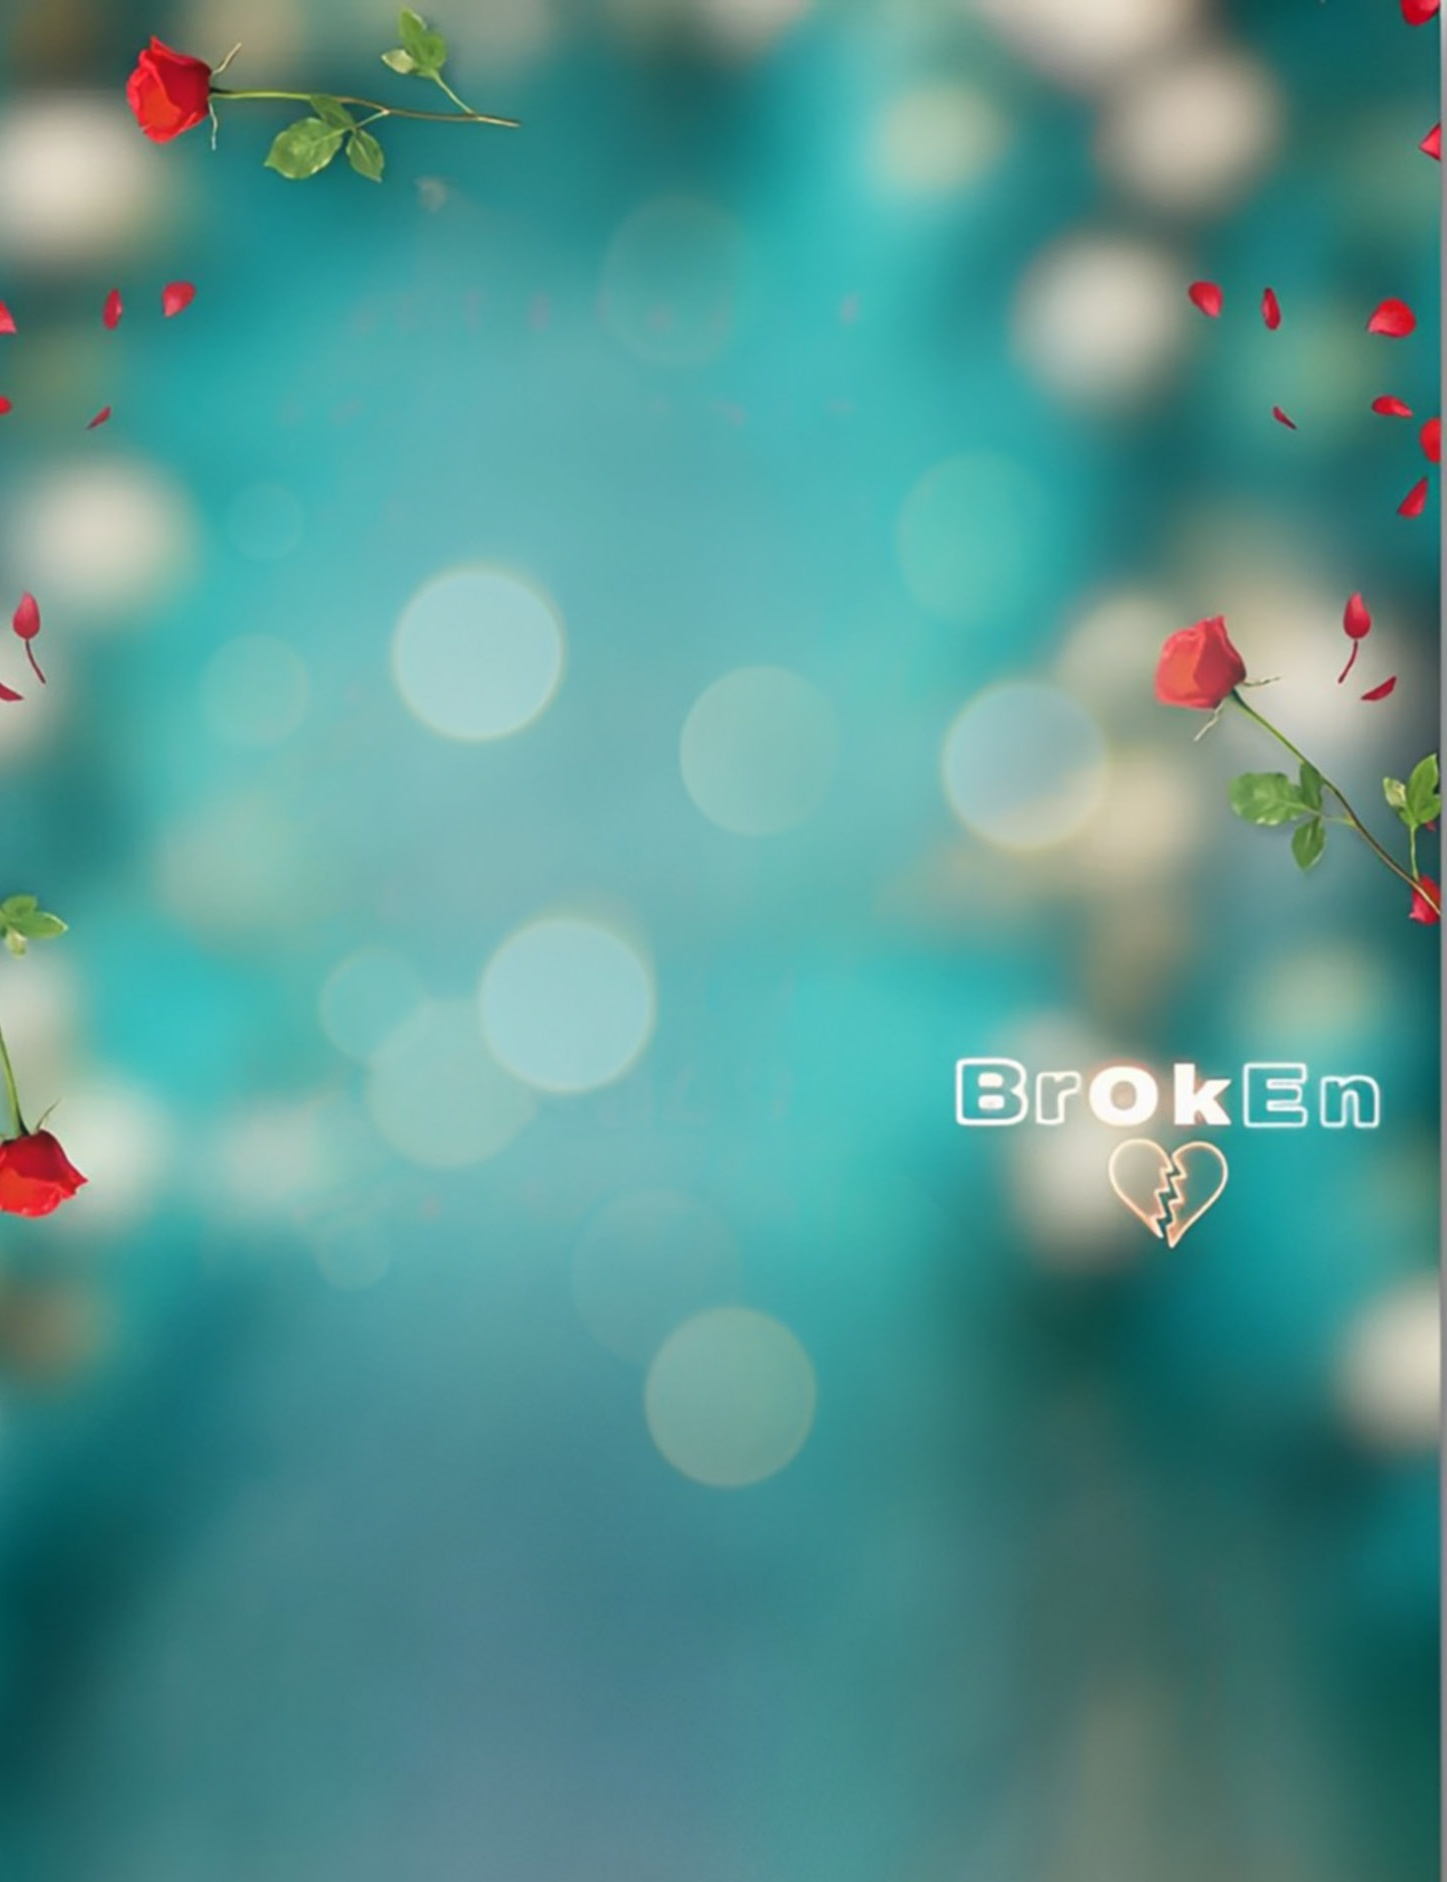 Broken Heart Blue Editing CB Background HD Image